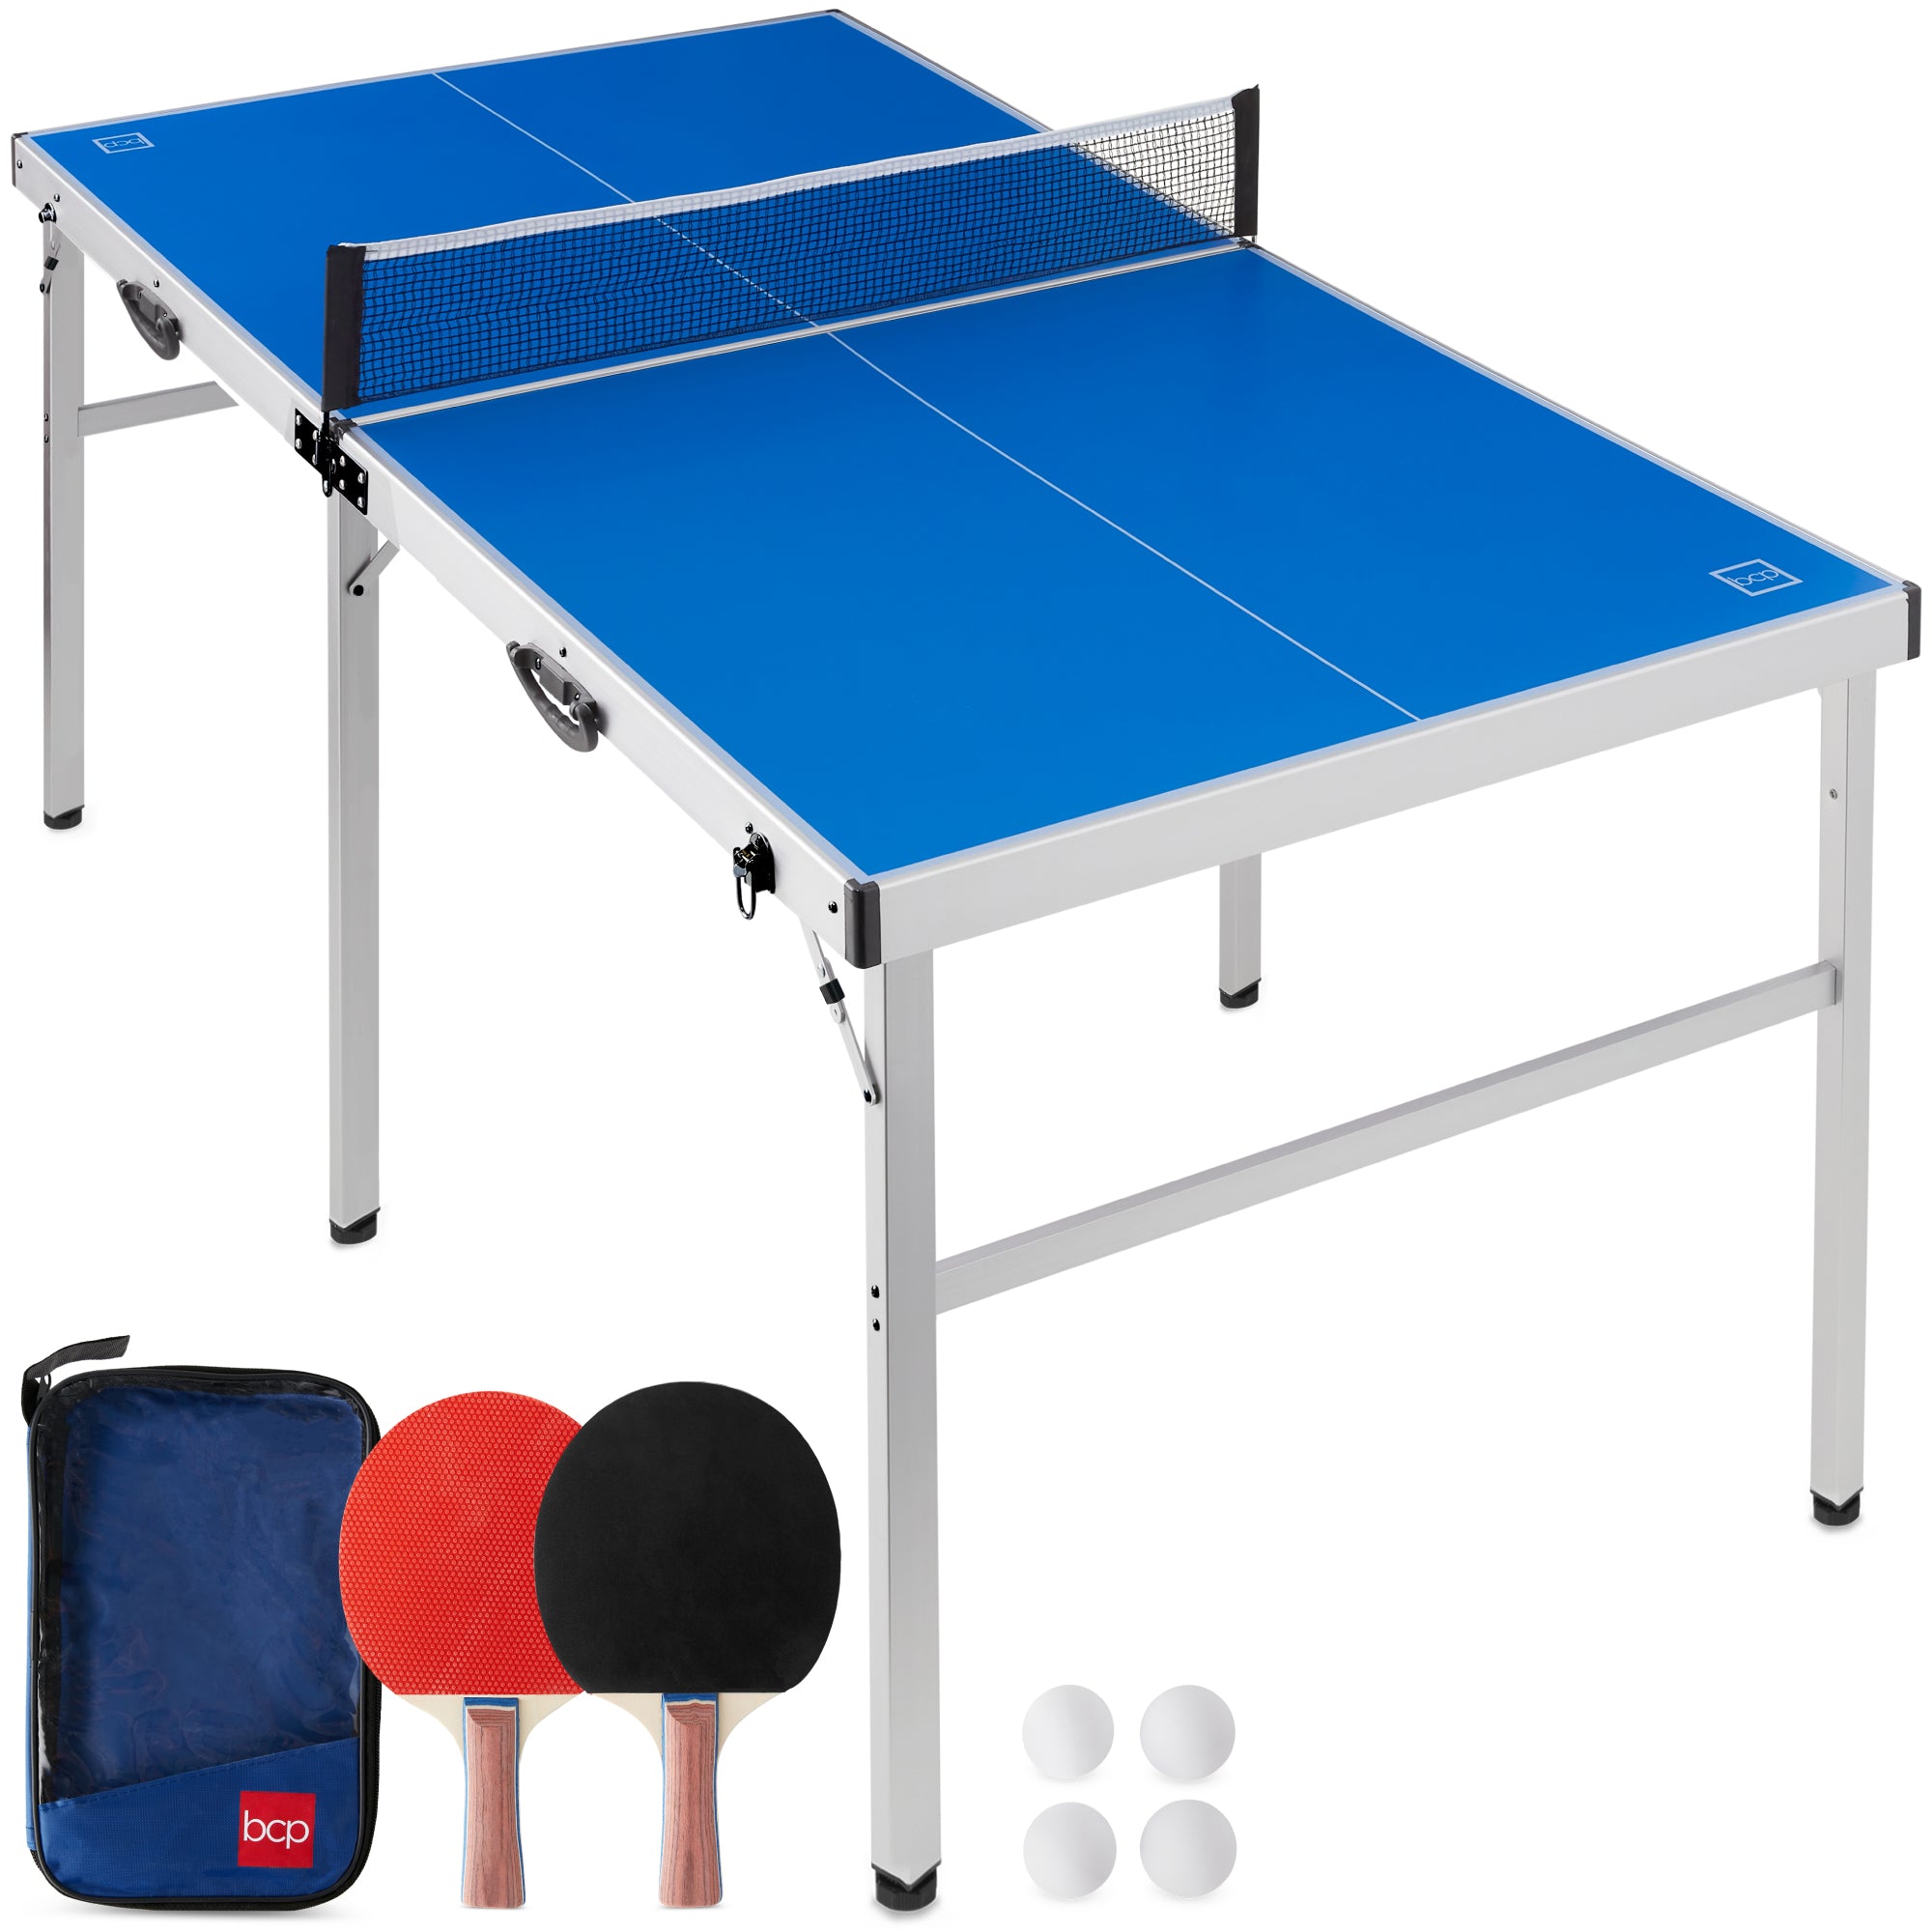 Ping Pong Set - COOL HUNTING®